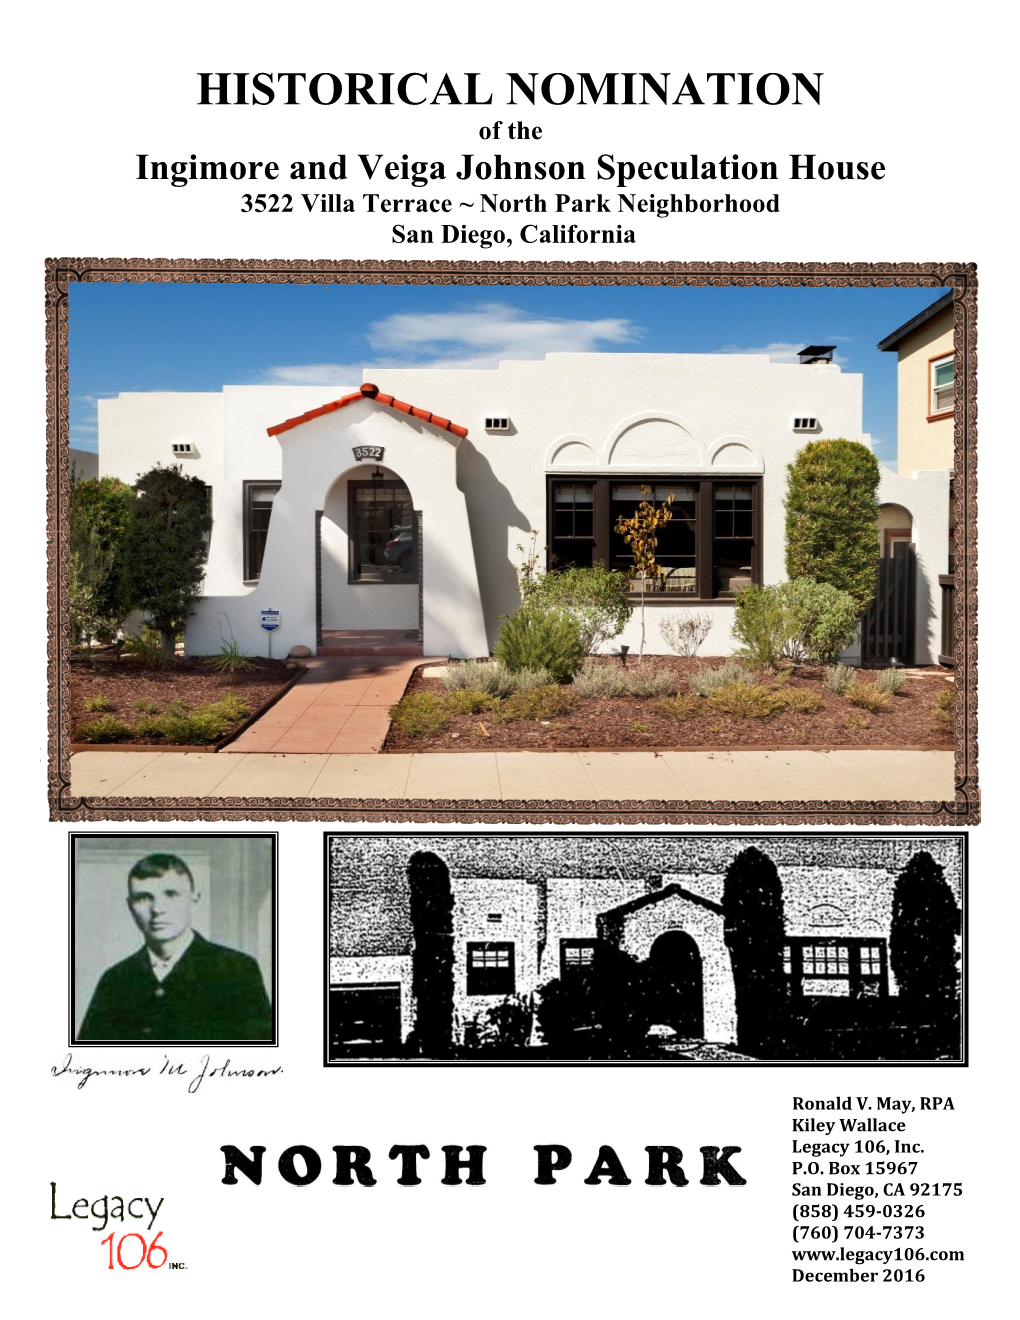 HISTORICAL NOMINATION of the Ingimore and Veiga Johnson Speculation House 3522 Villa Terrace ~ North Park Neighborhood San Diego, California